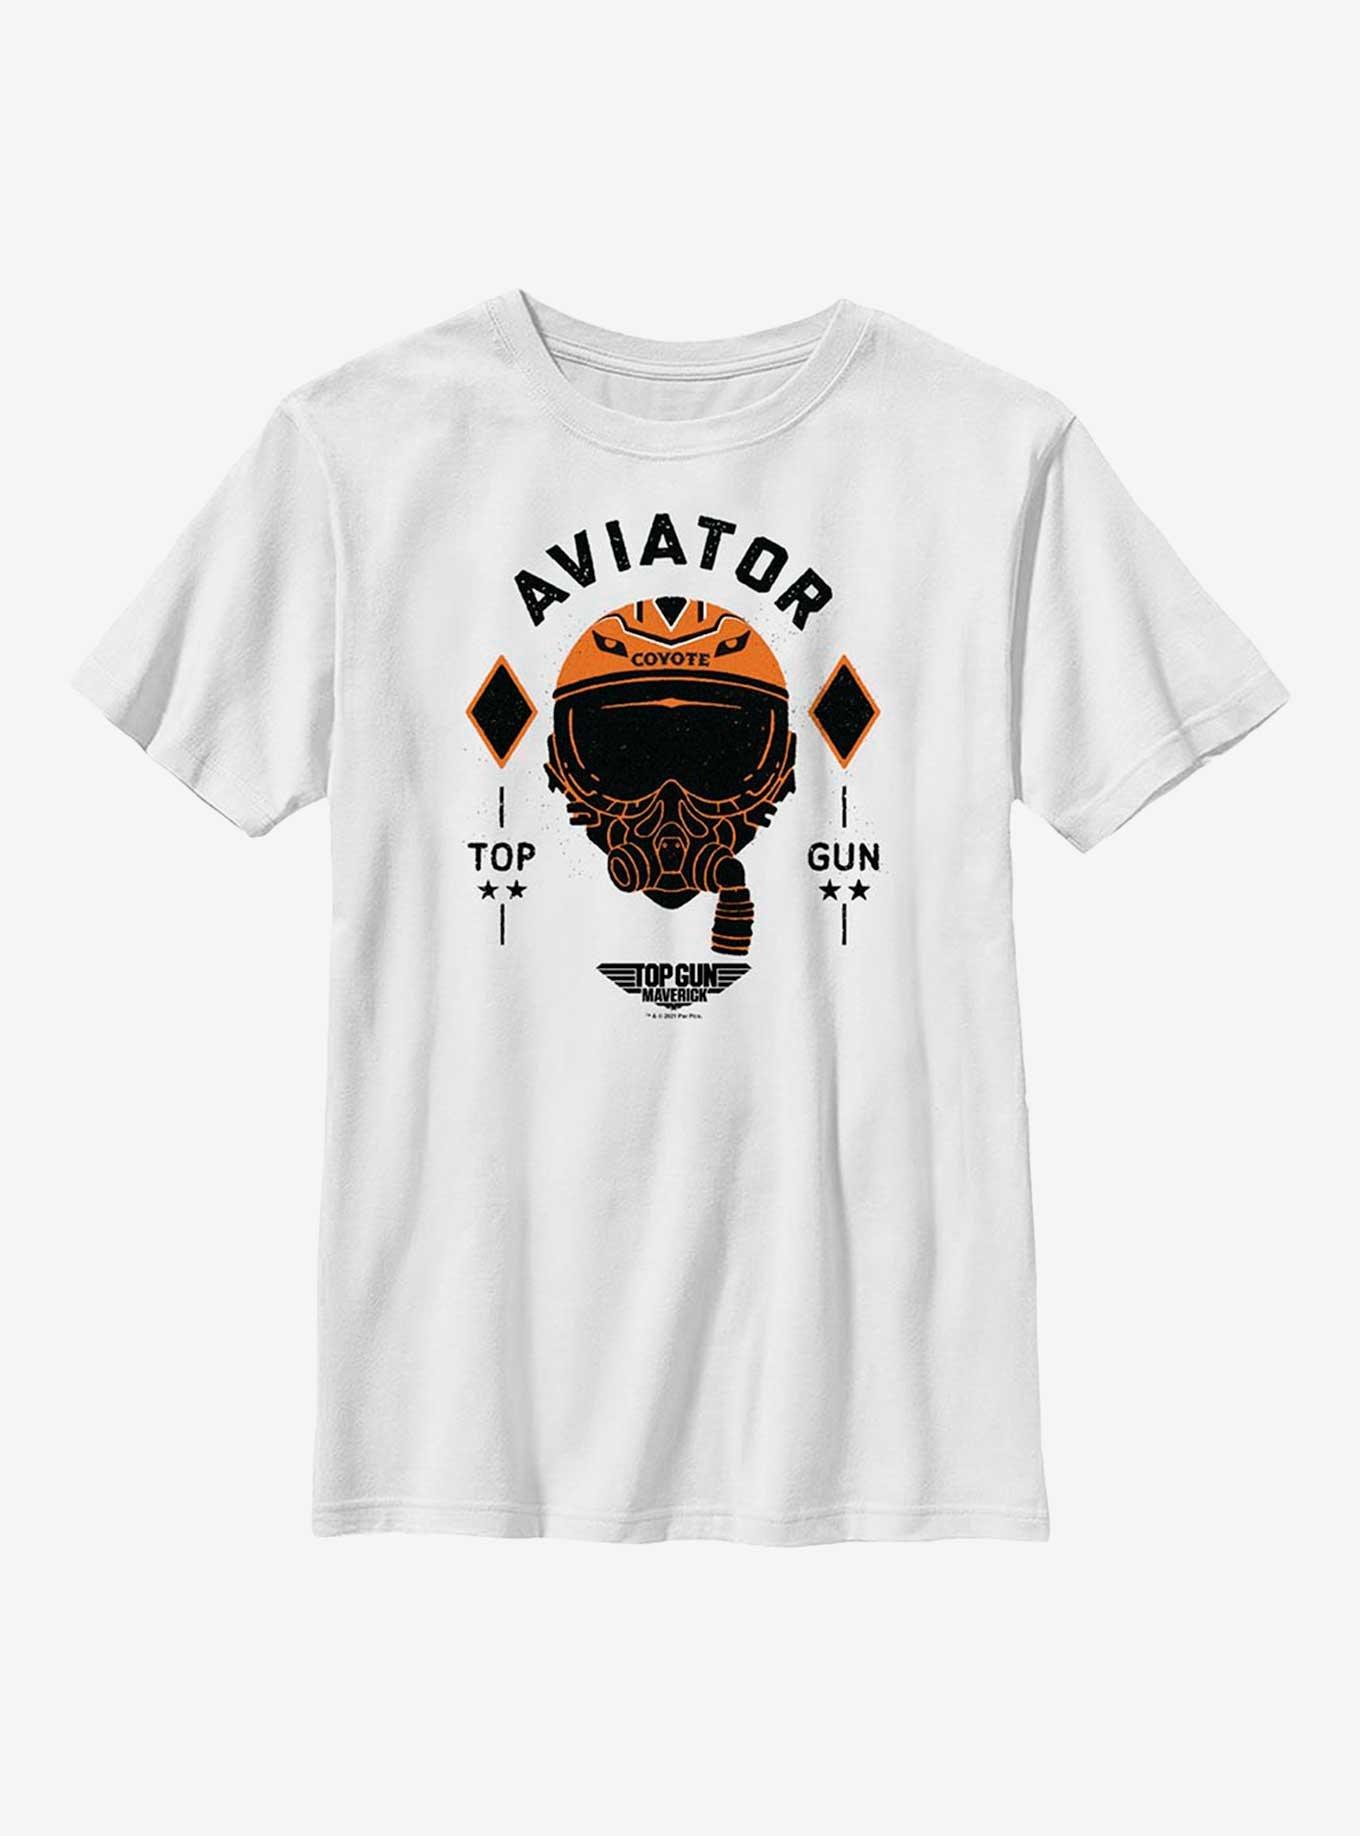 Top Gun: Maverick Coyote Aviator Youth T-Shirt, , hi-res